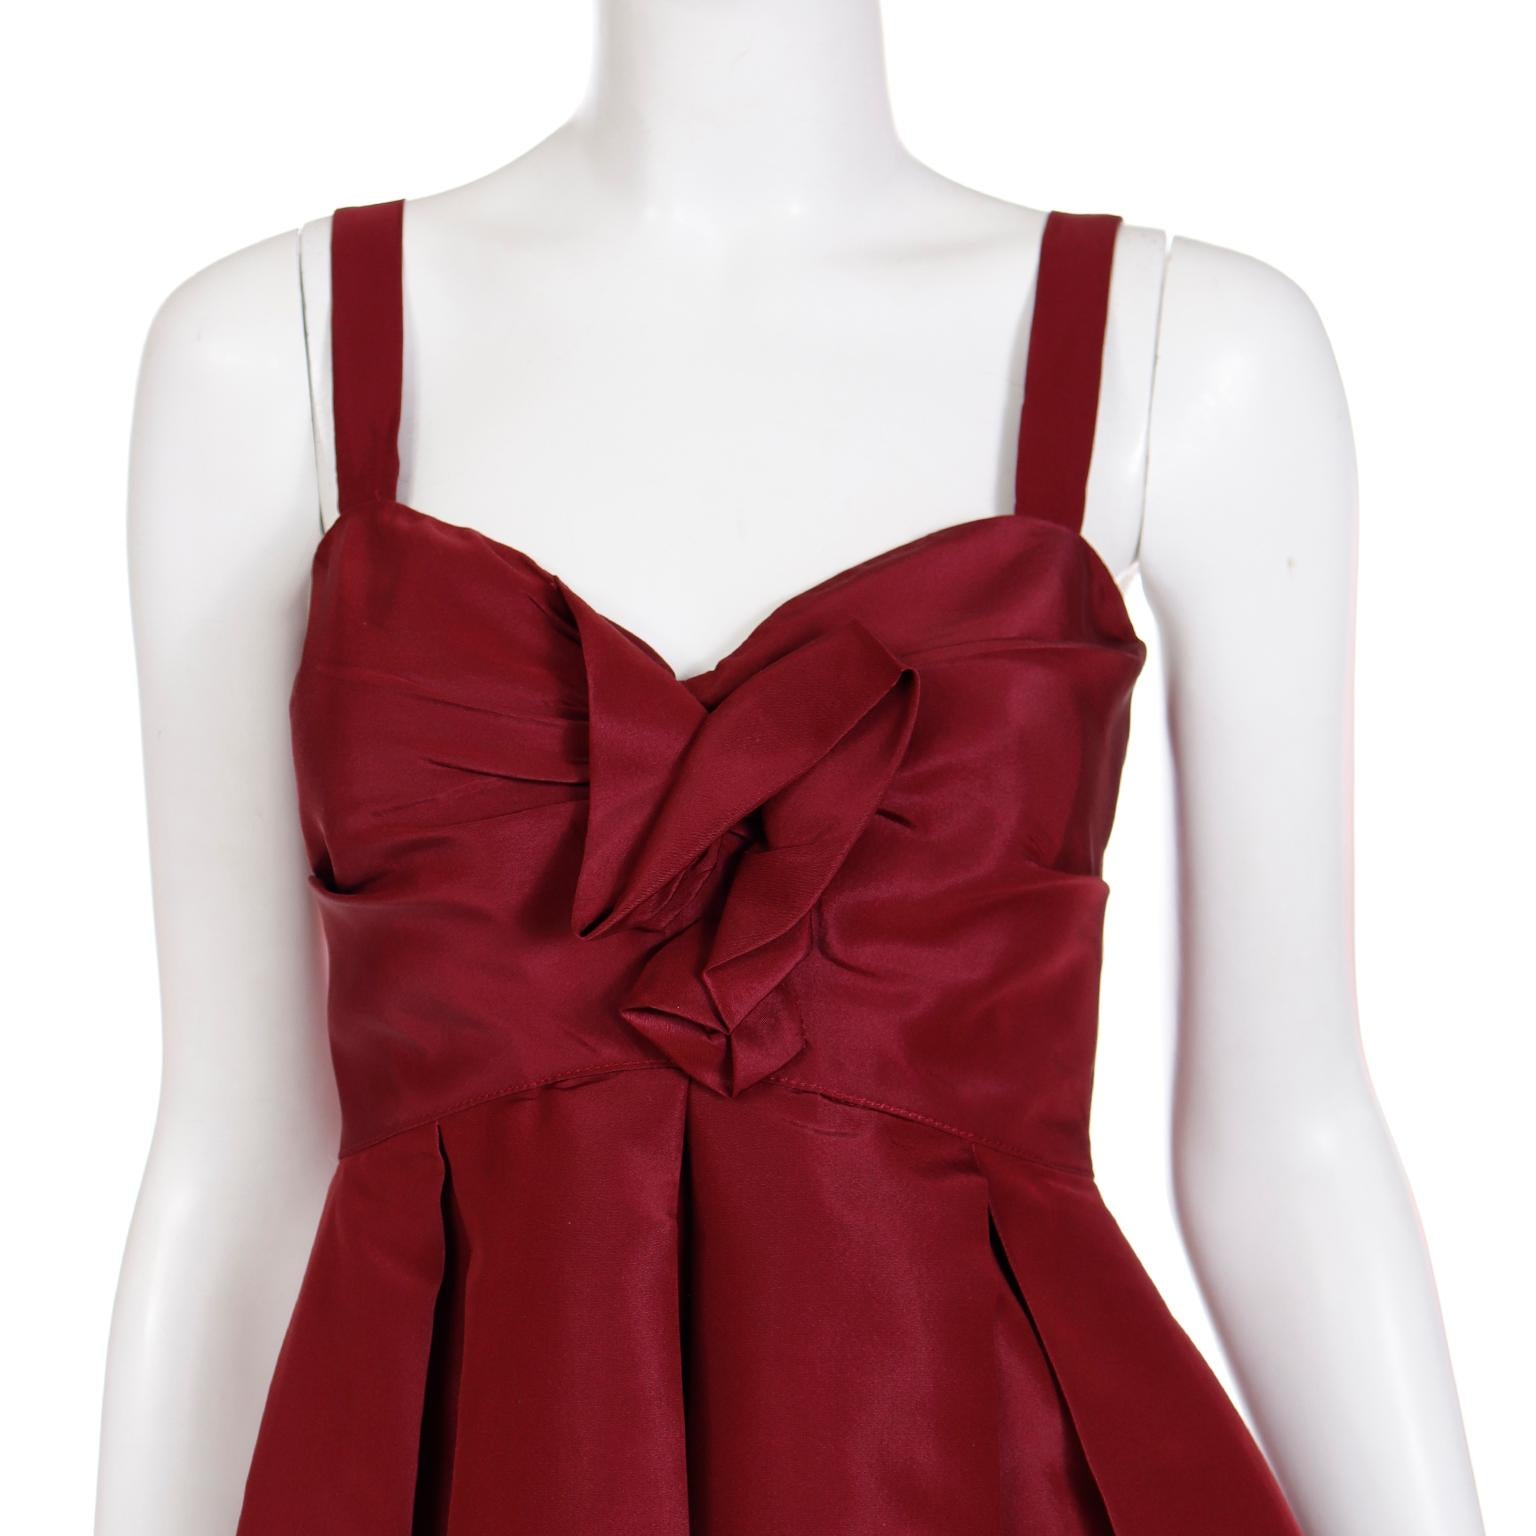 Oscar de la Renta Fall 2007 Burgundy Red Silk Evening Mini Dress For Sale 2